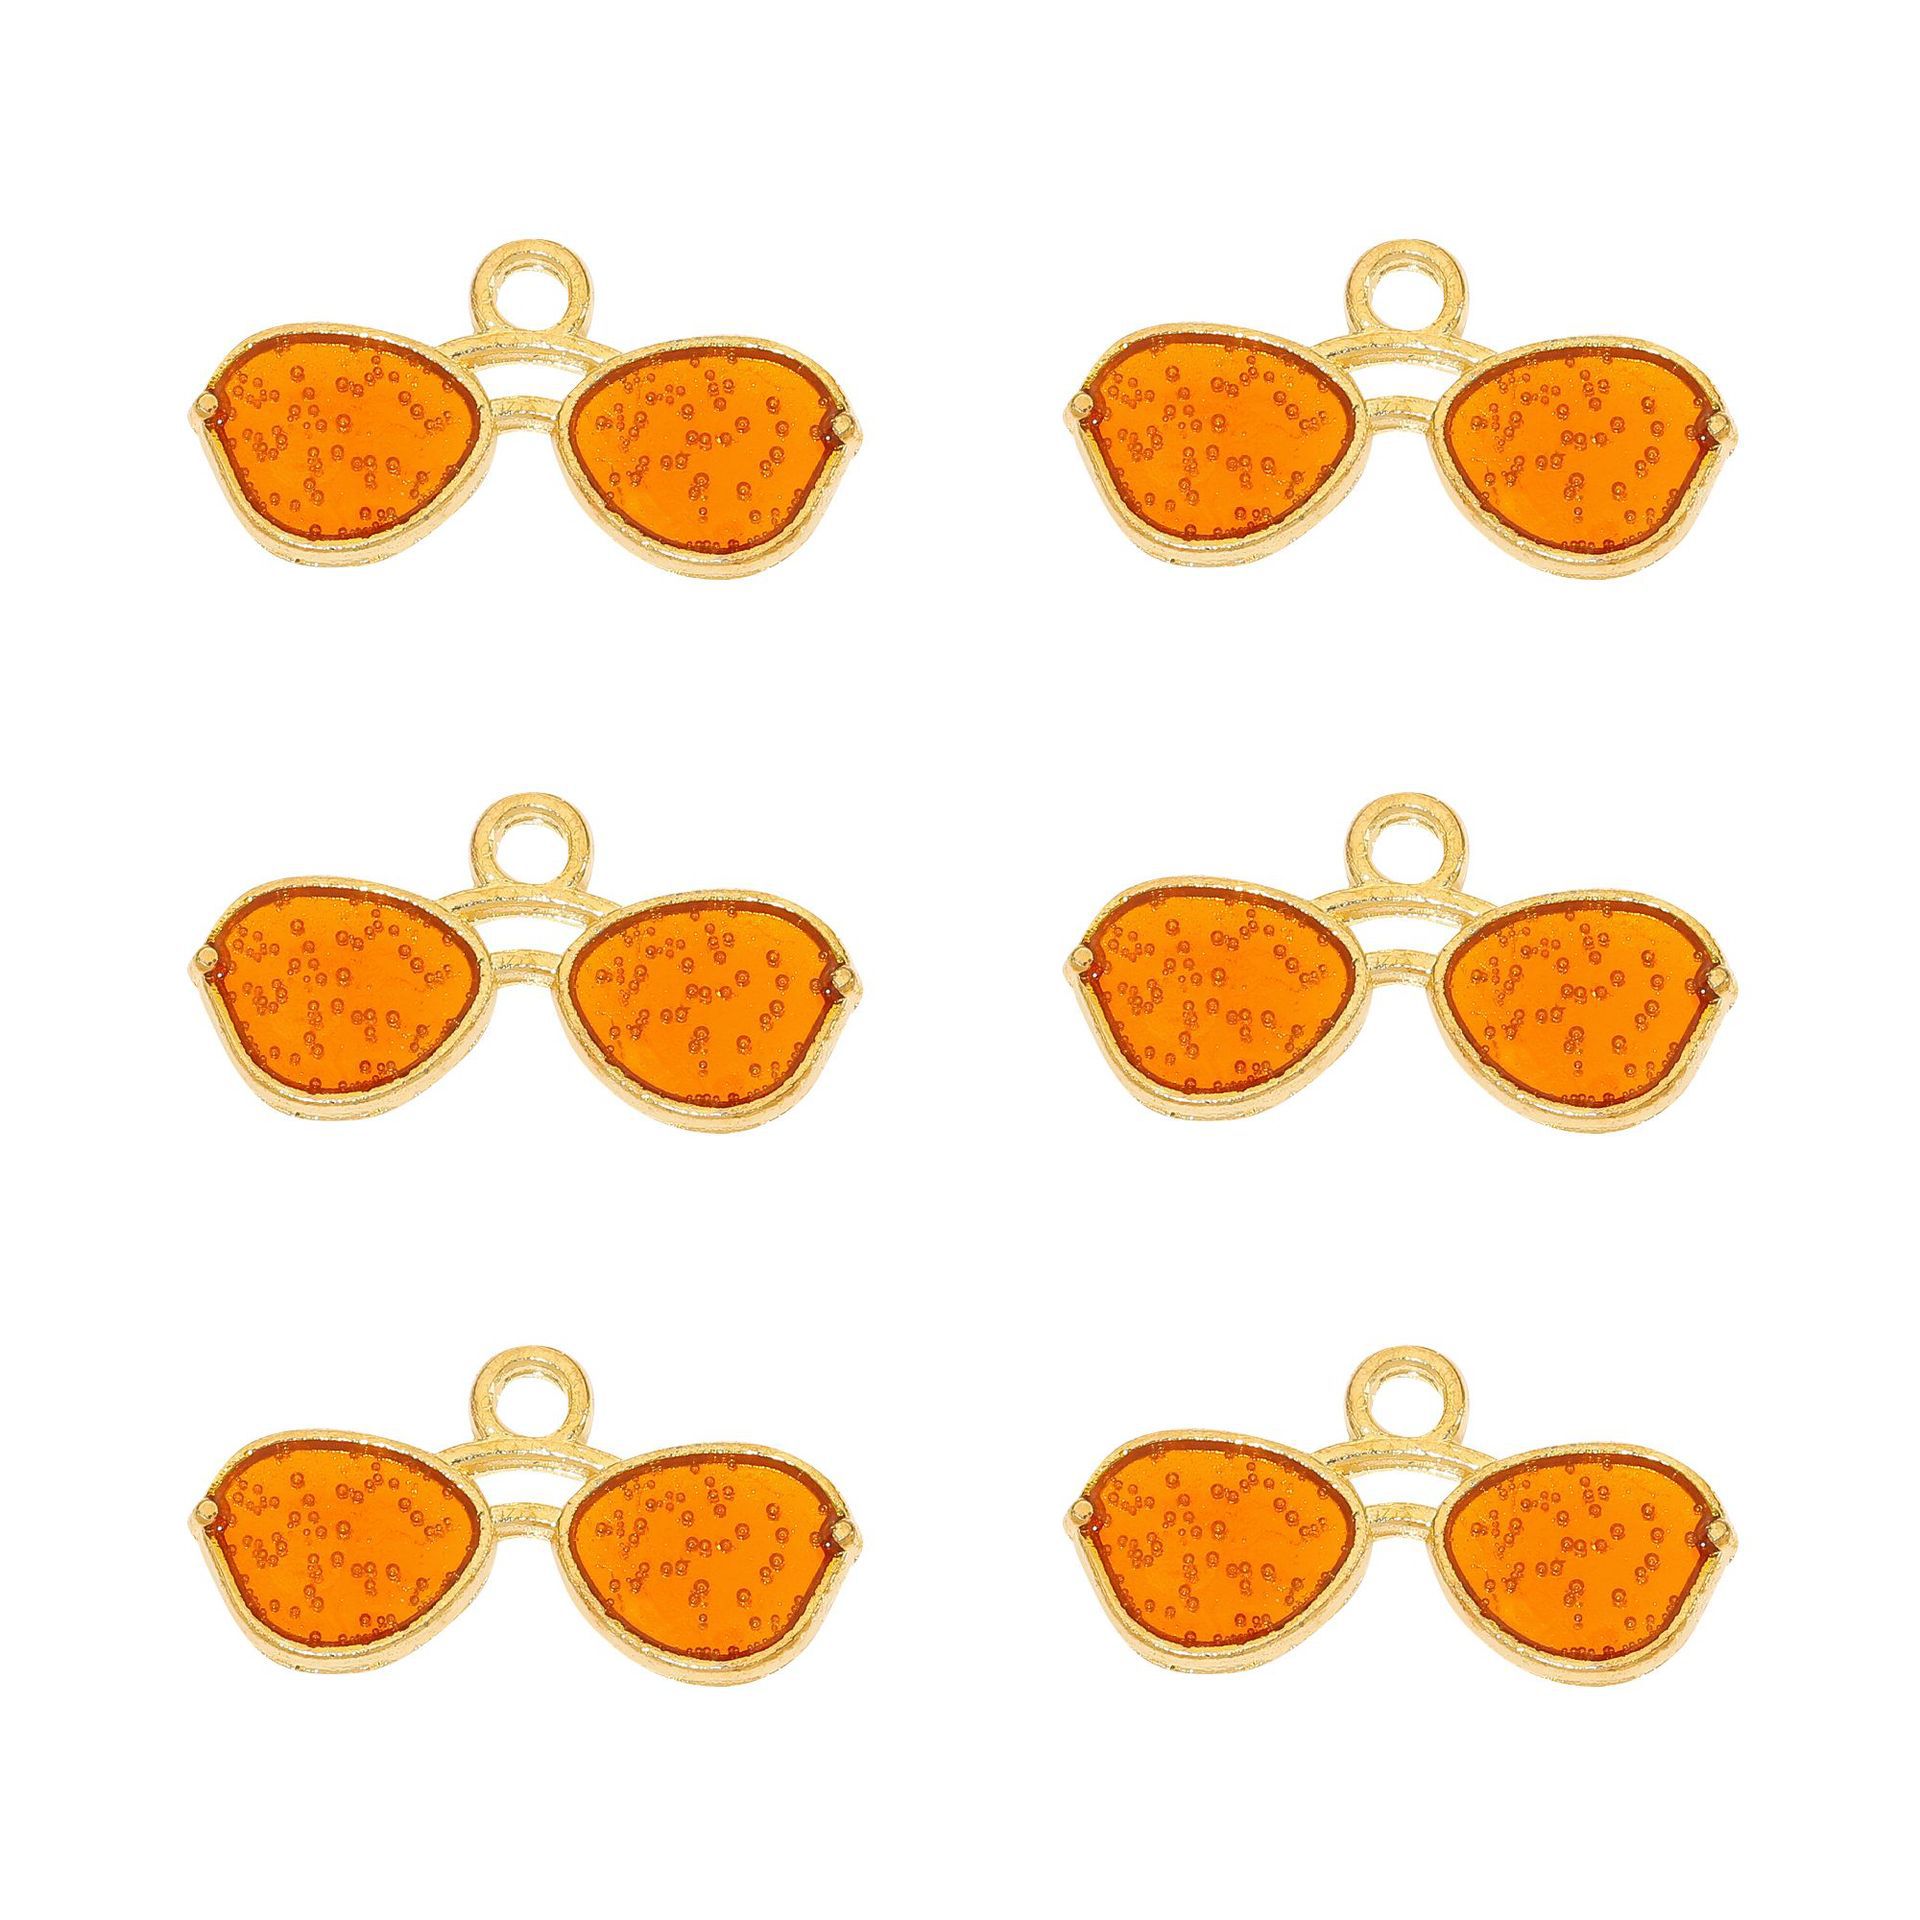 2:naranja